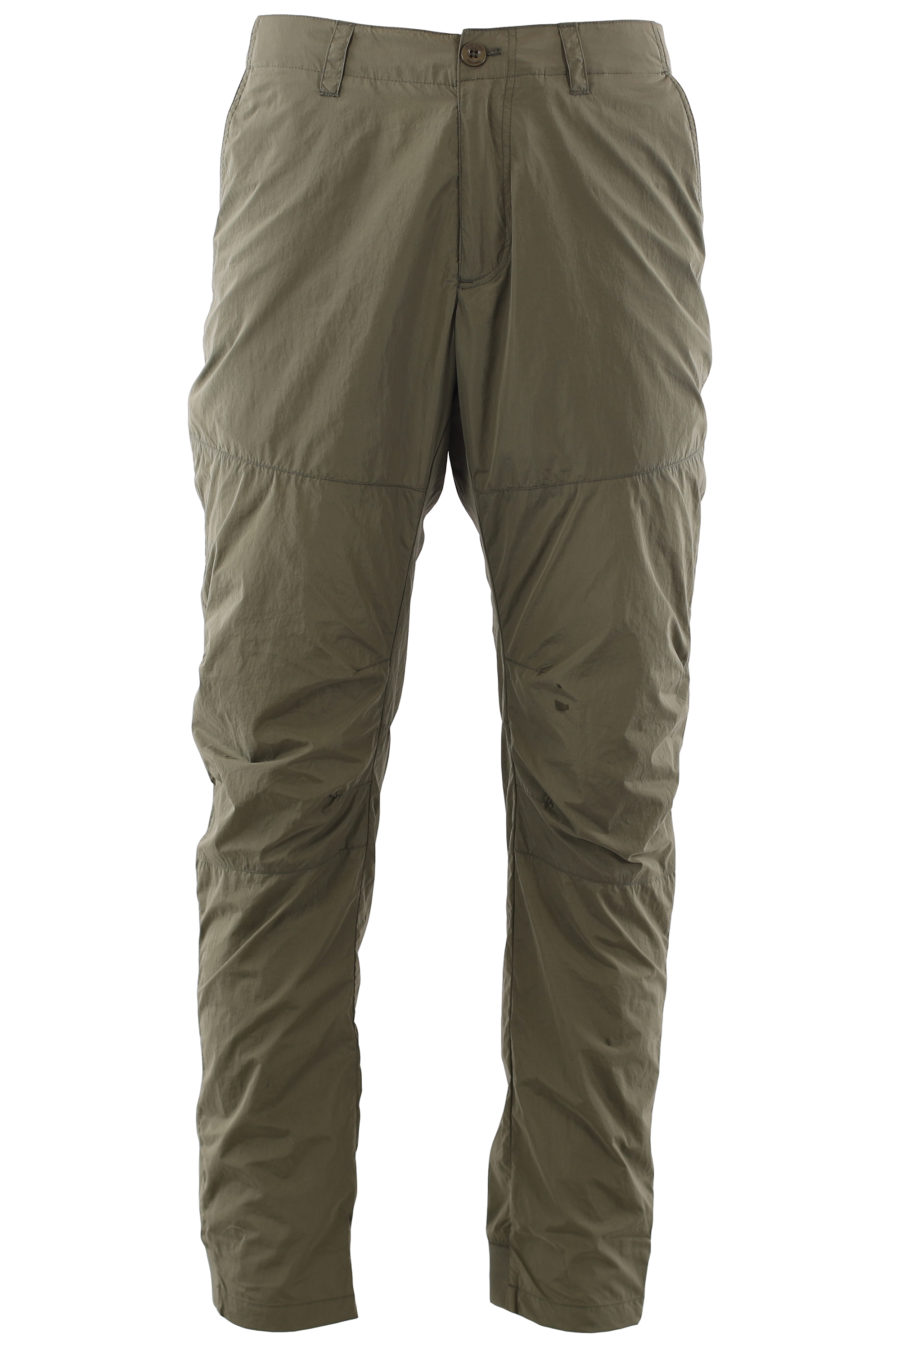 Pantalón largo "Tactical" color verde militar - IMG 6662